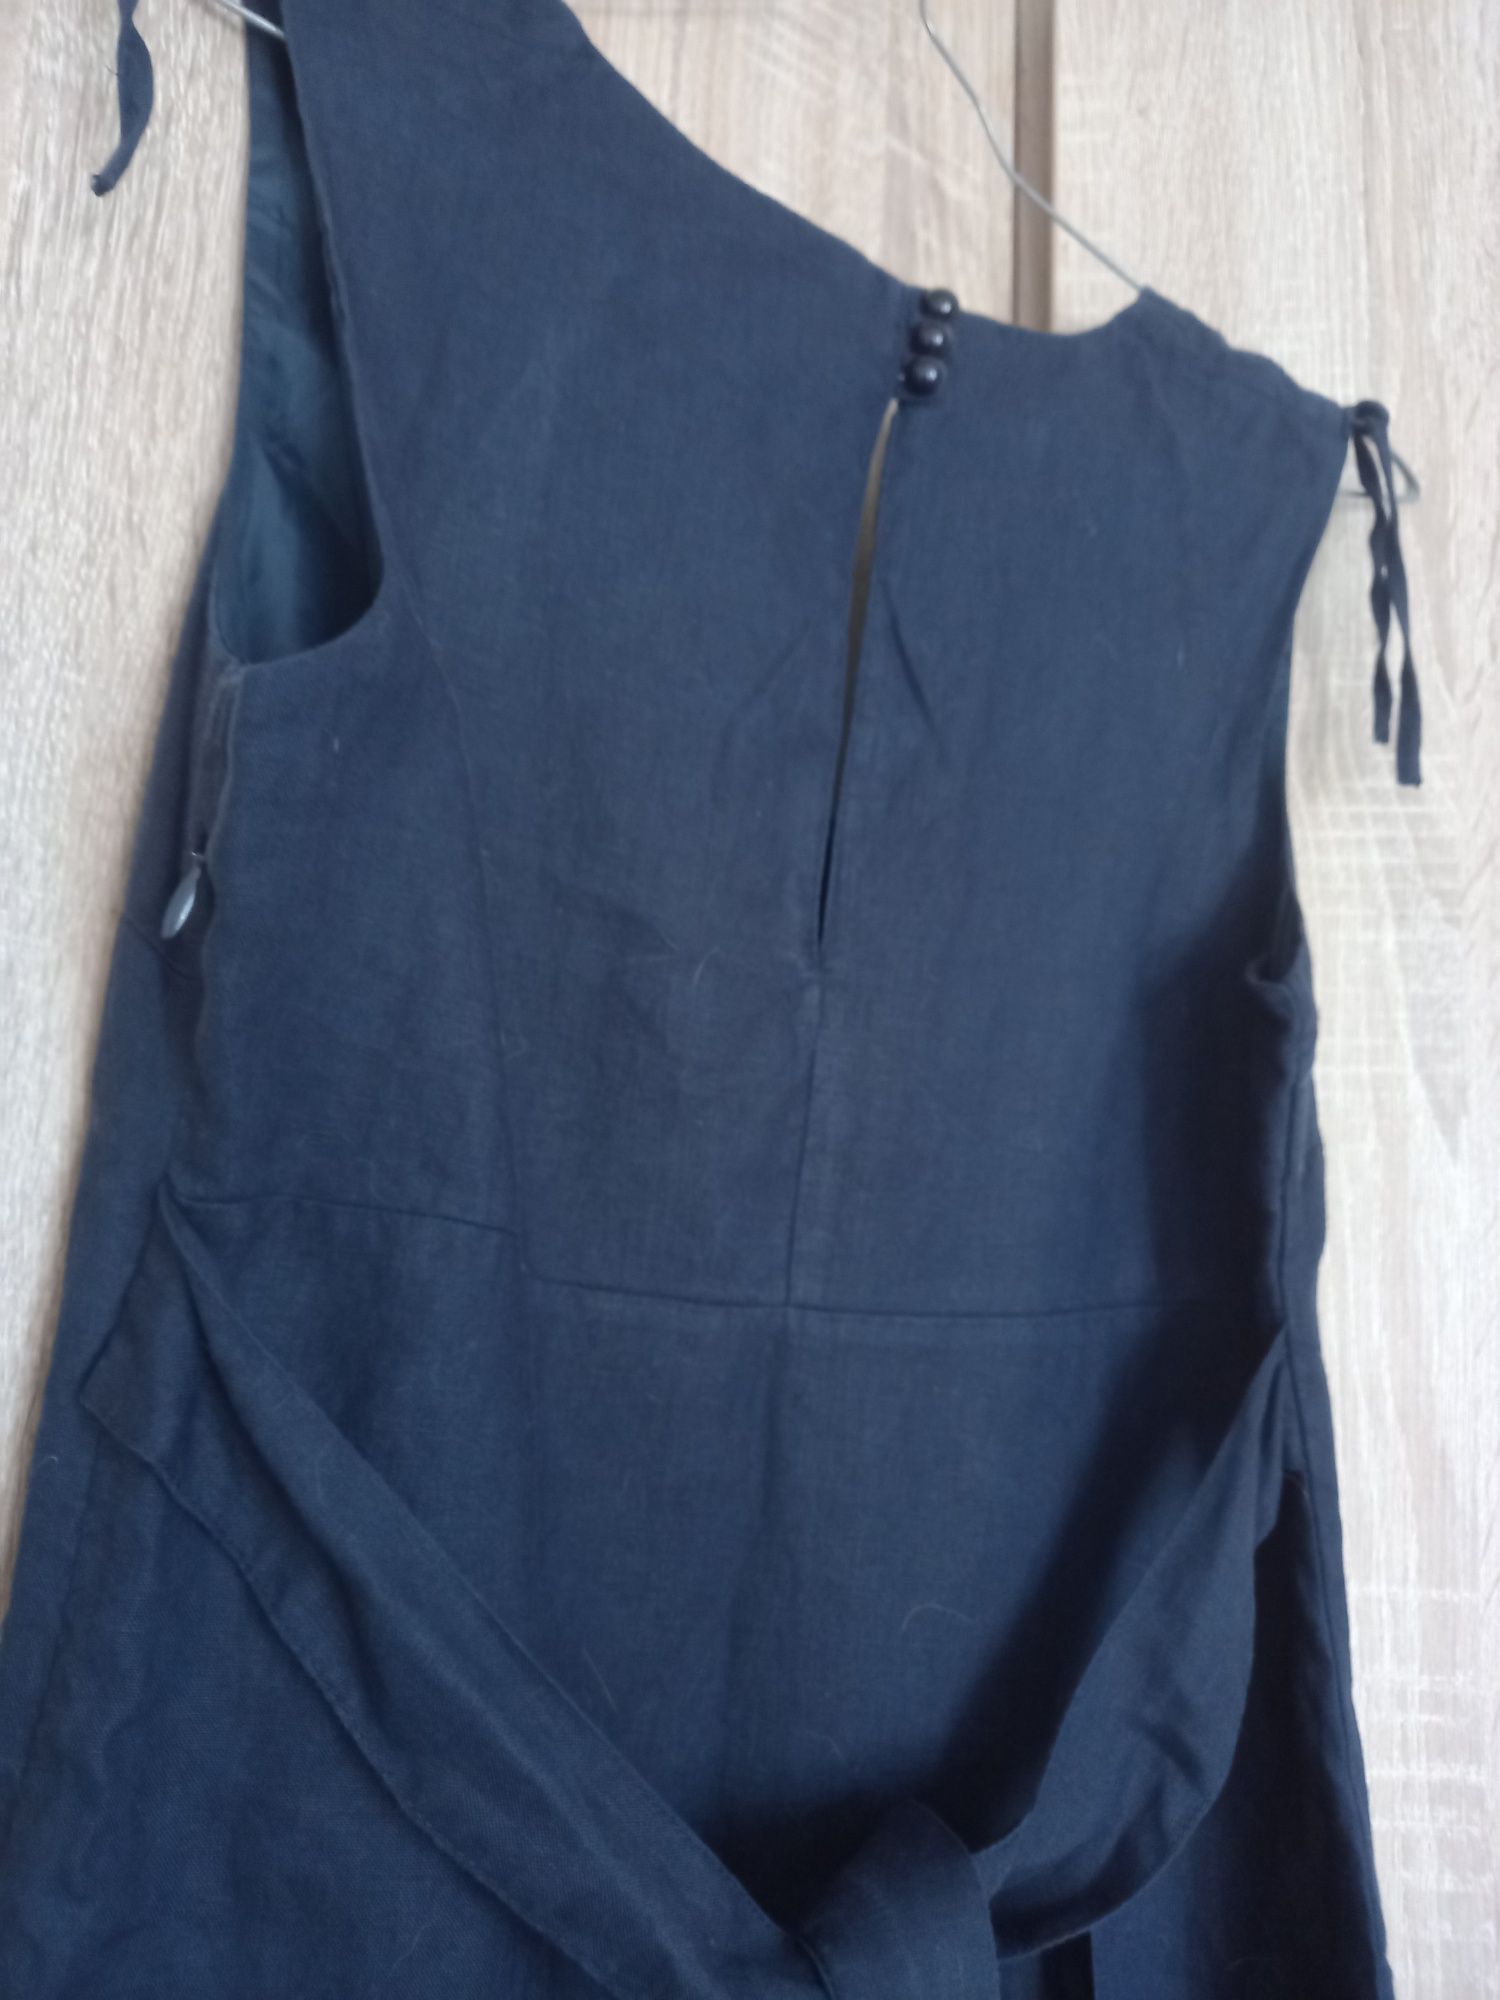 Granatowa, lniana sukienka rozmiar 36 Va Vite